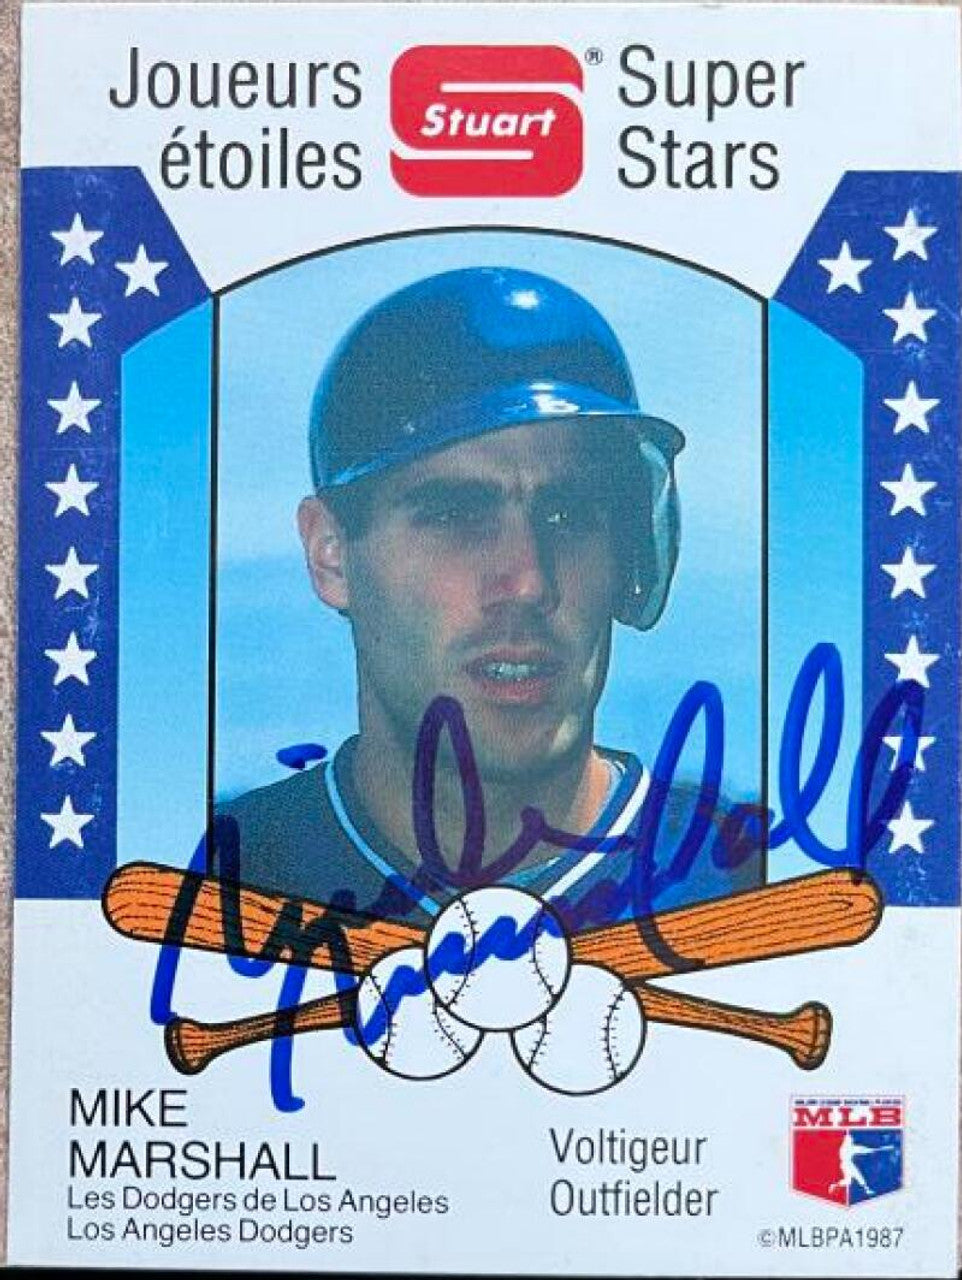 Mike Marshall Signed 1987 Stuart Bakery Super Stars Baseball Card - Los Angeles Dodgers